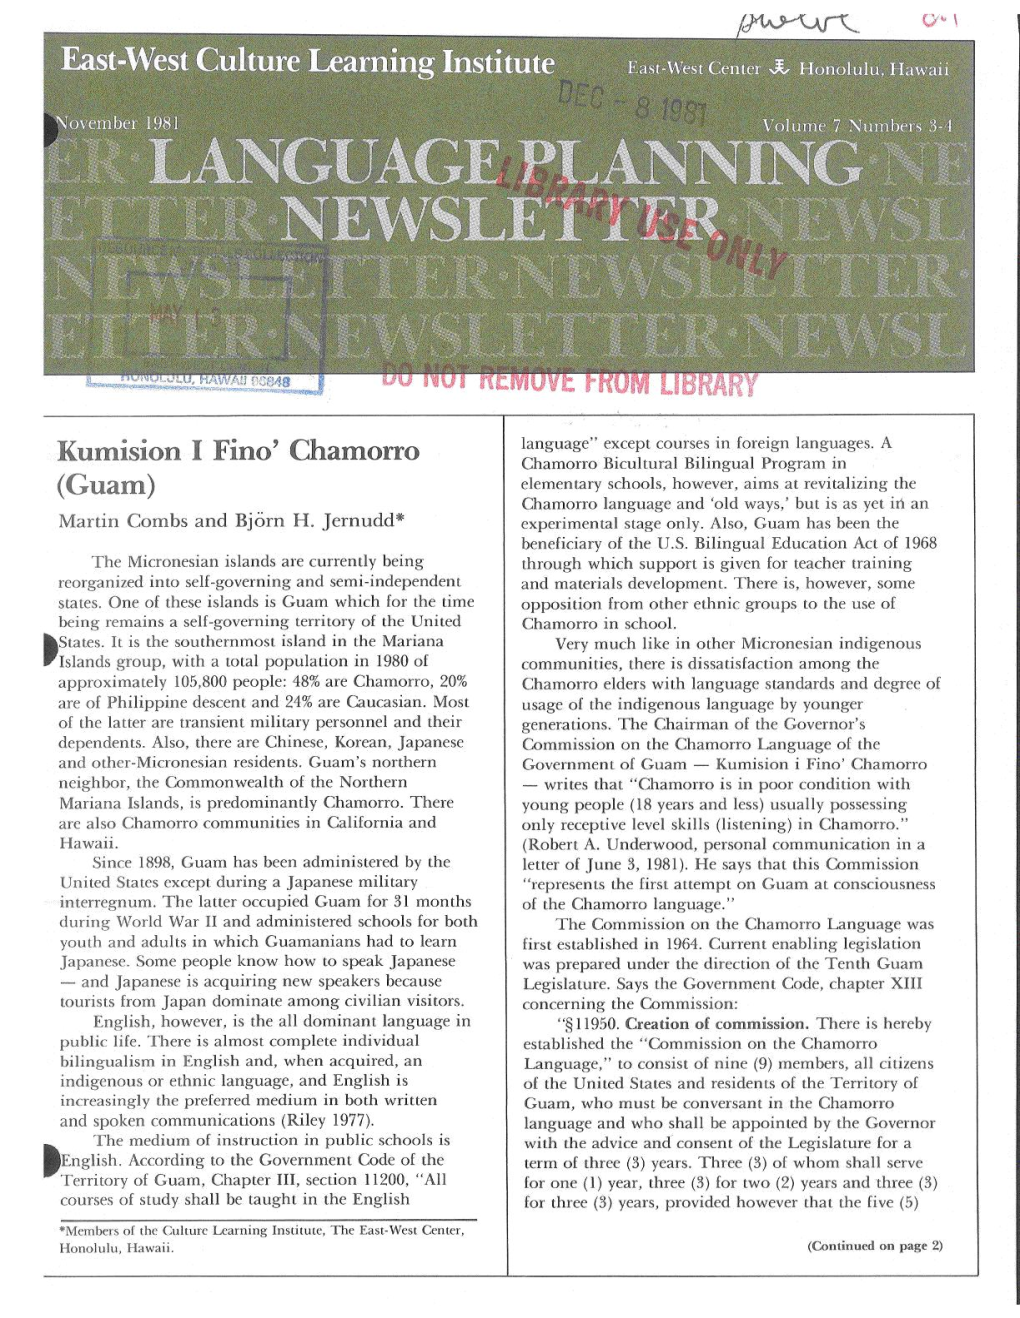 Language Planning Newsletter, November 1981, Vol. 7, No